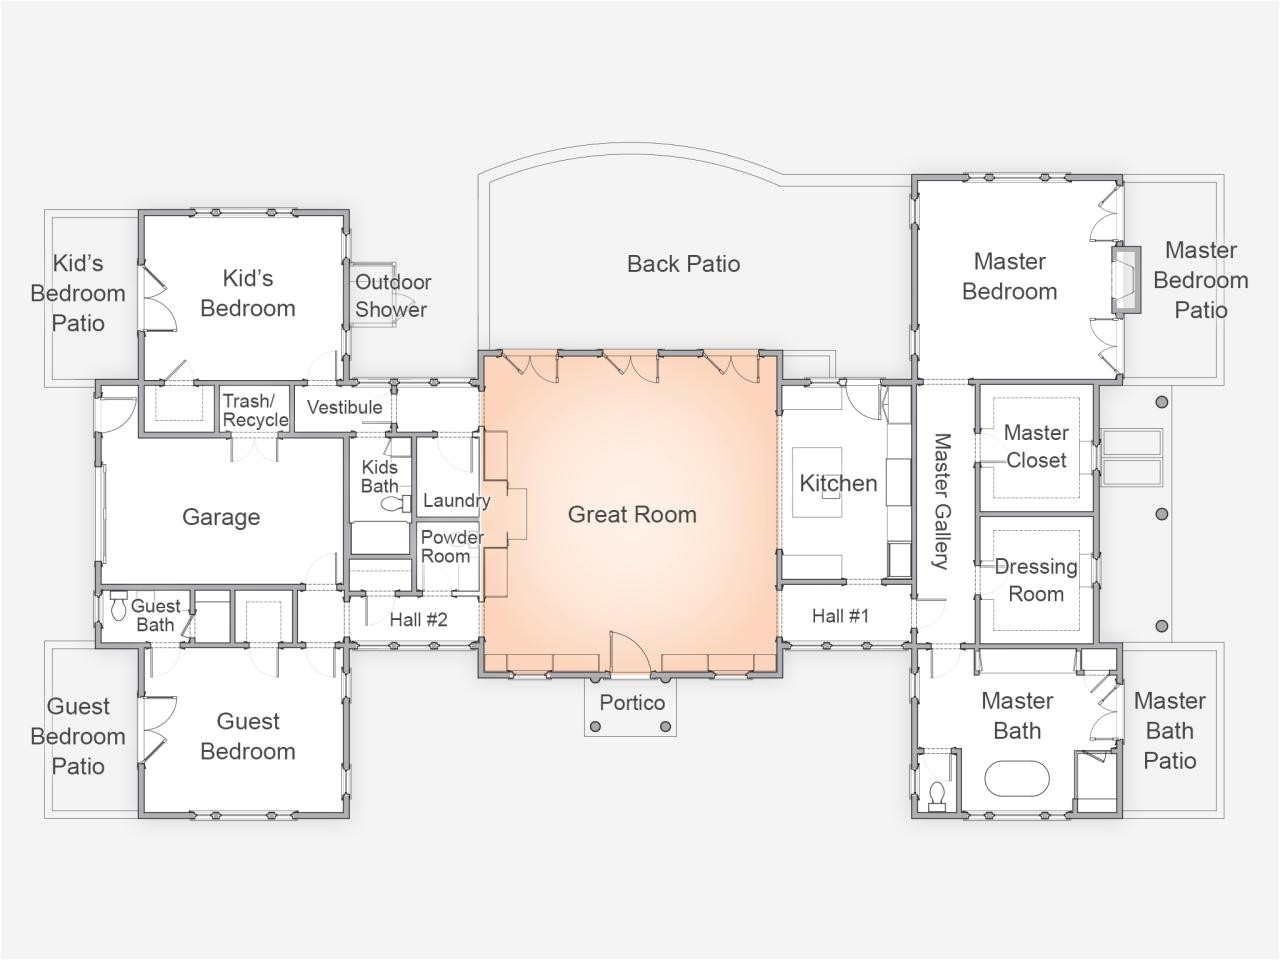 Hgtv Dream Home10 Floor Plan Buy 2015 Hgtv Sweepstaken Home Design Plans Autos Post